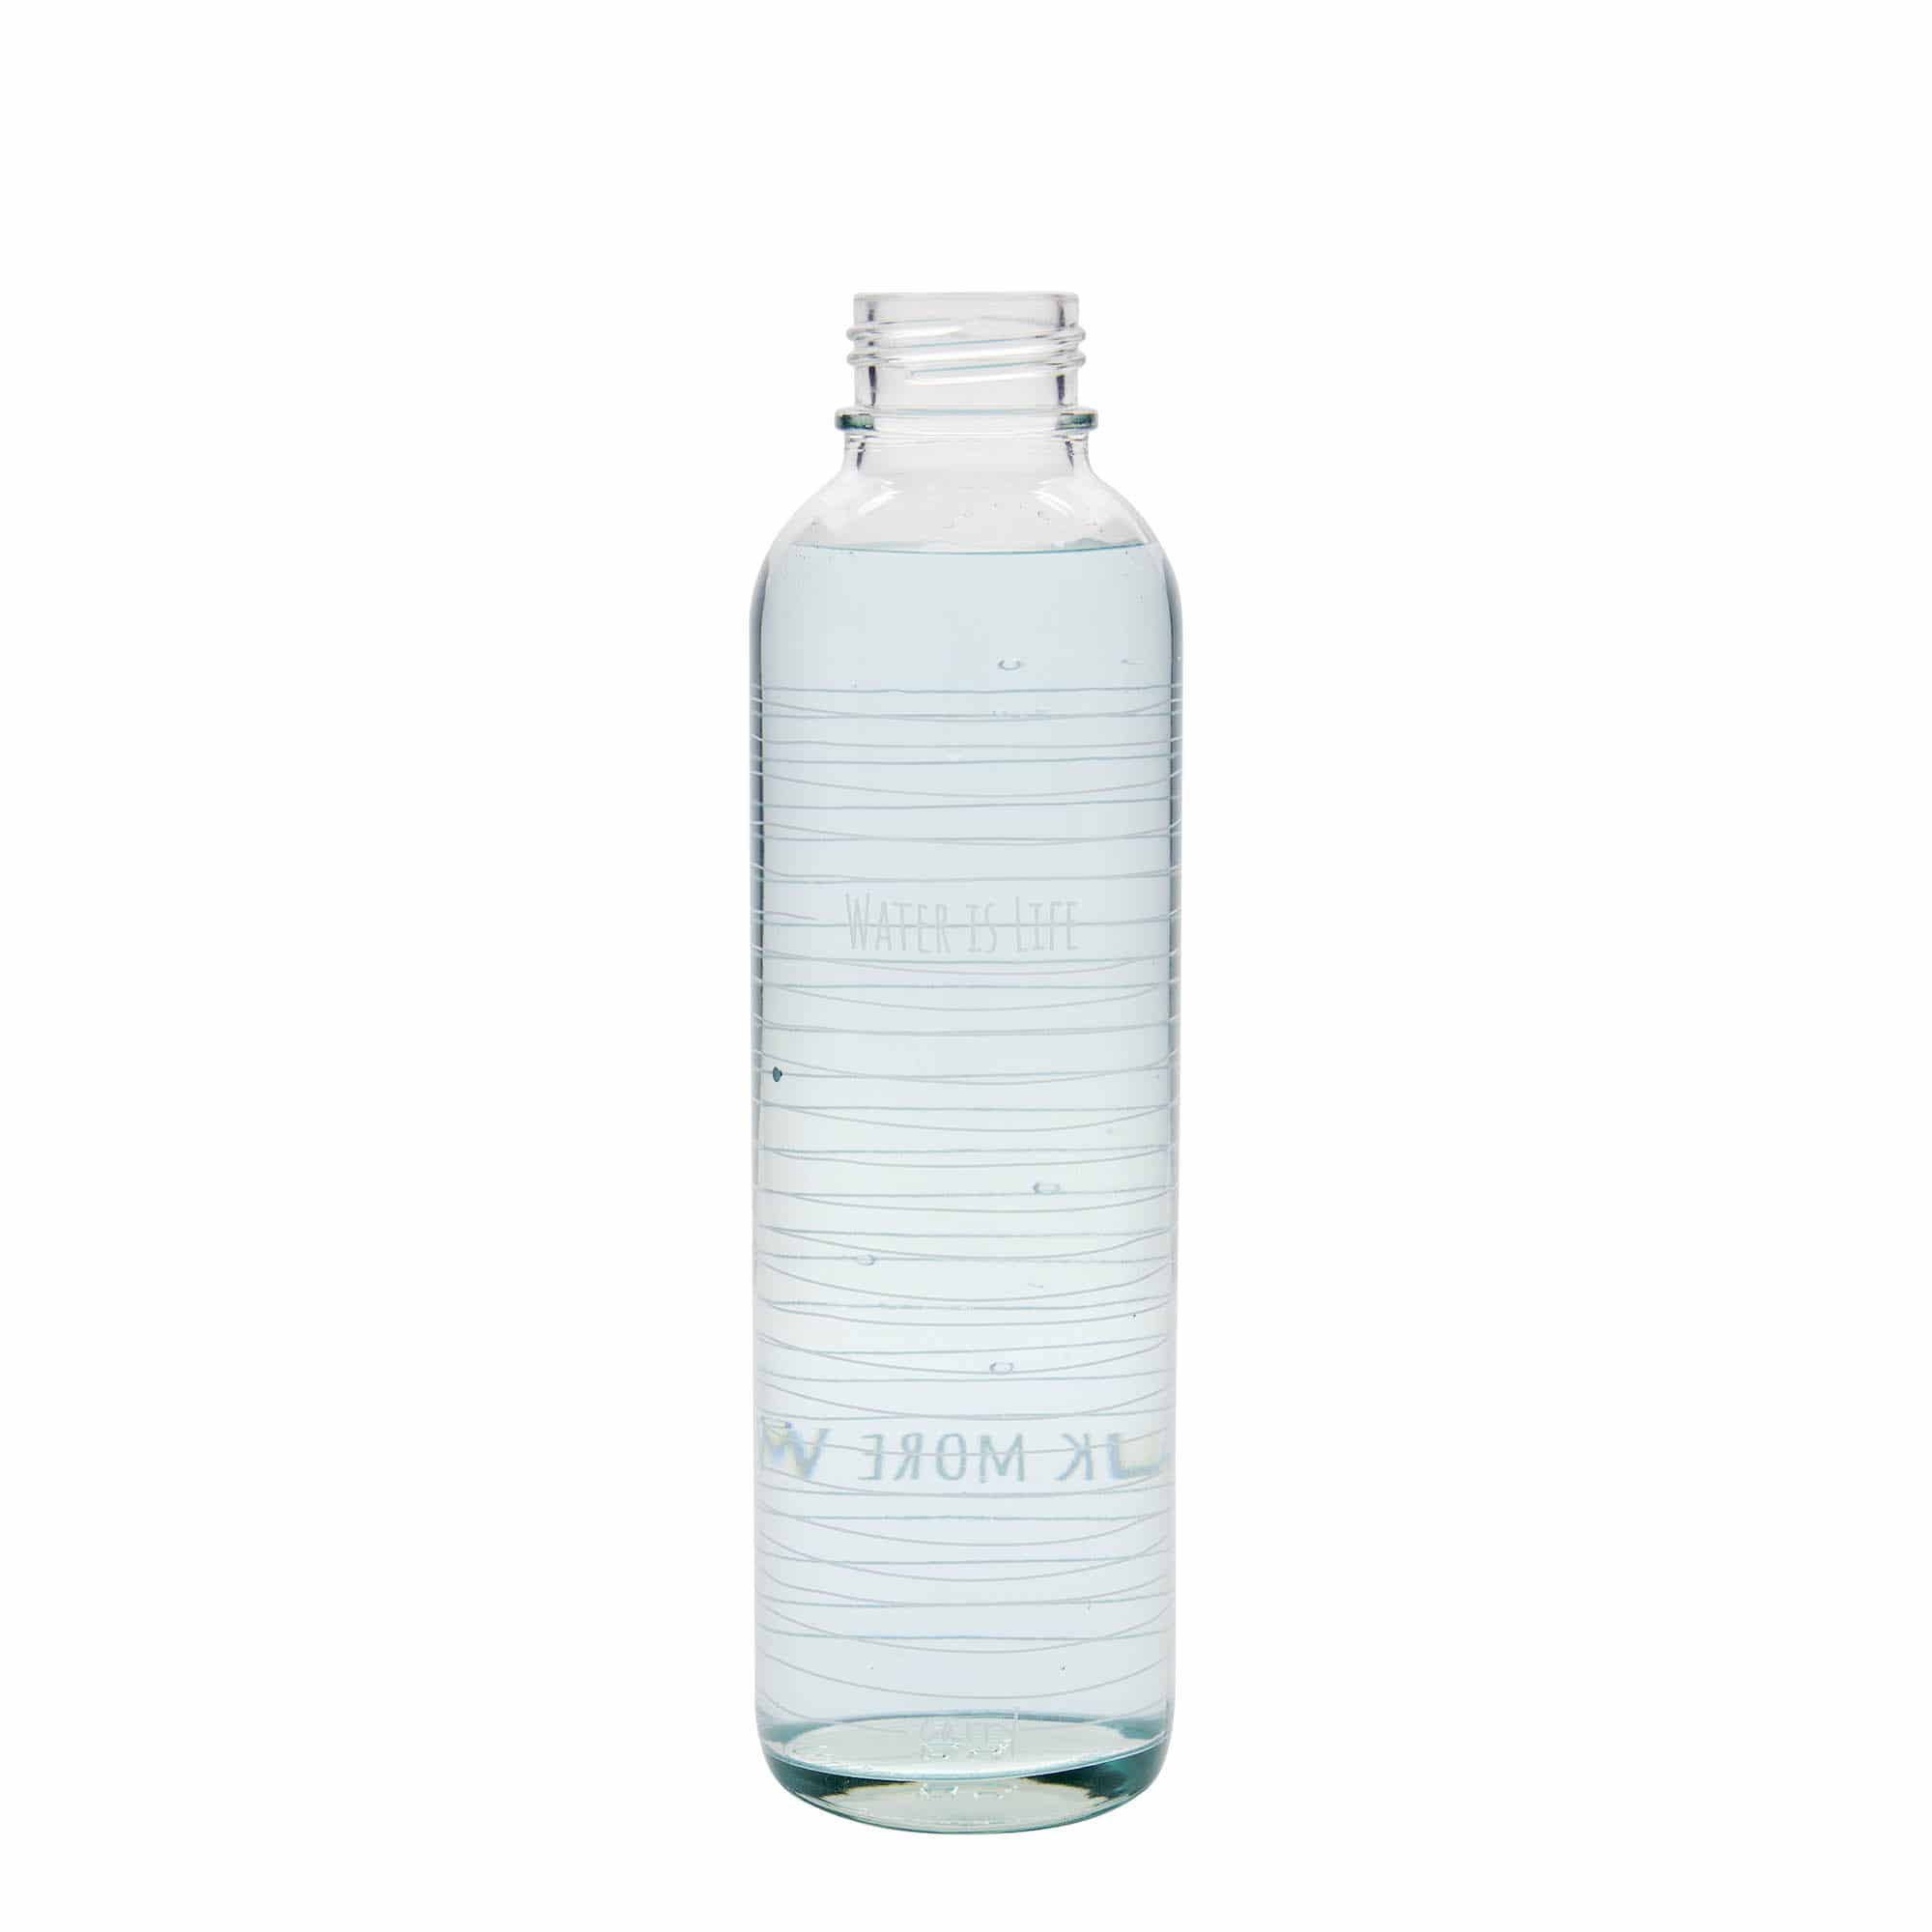 700 ml water bottle ‘CARRY Bottle’, print: Water is Life, closure: screw cap